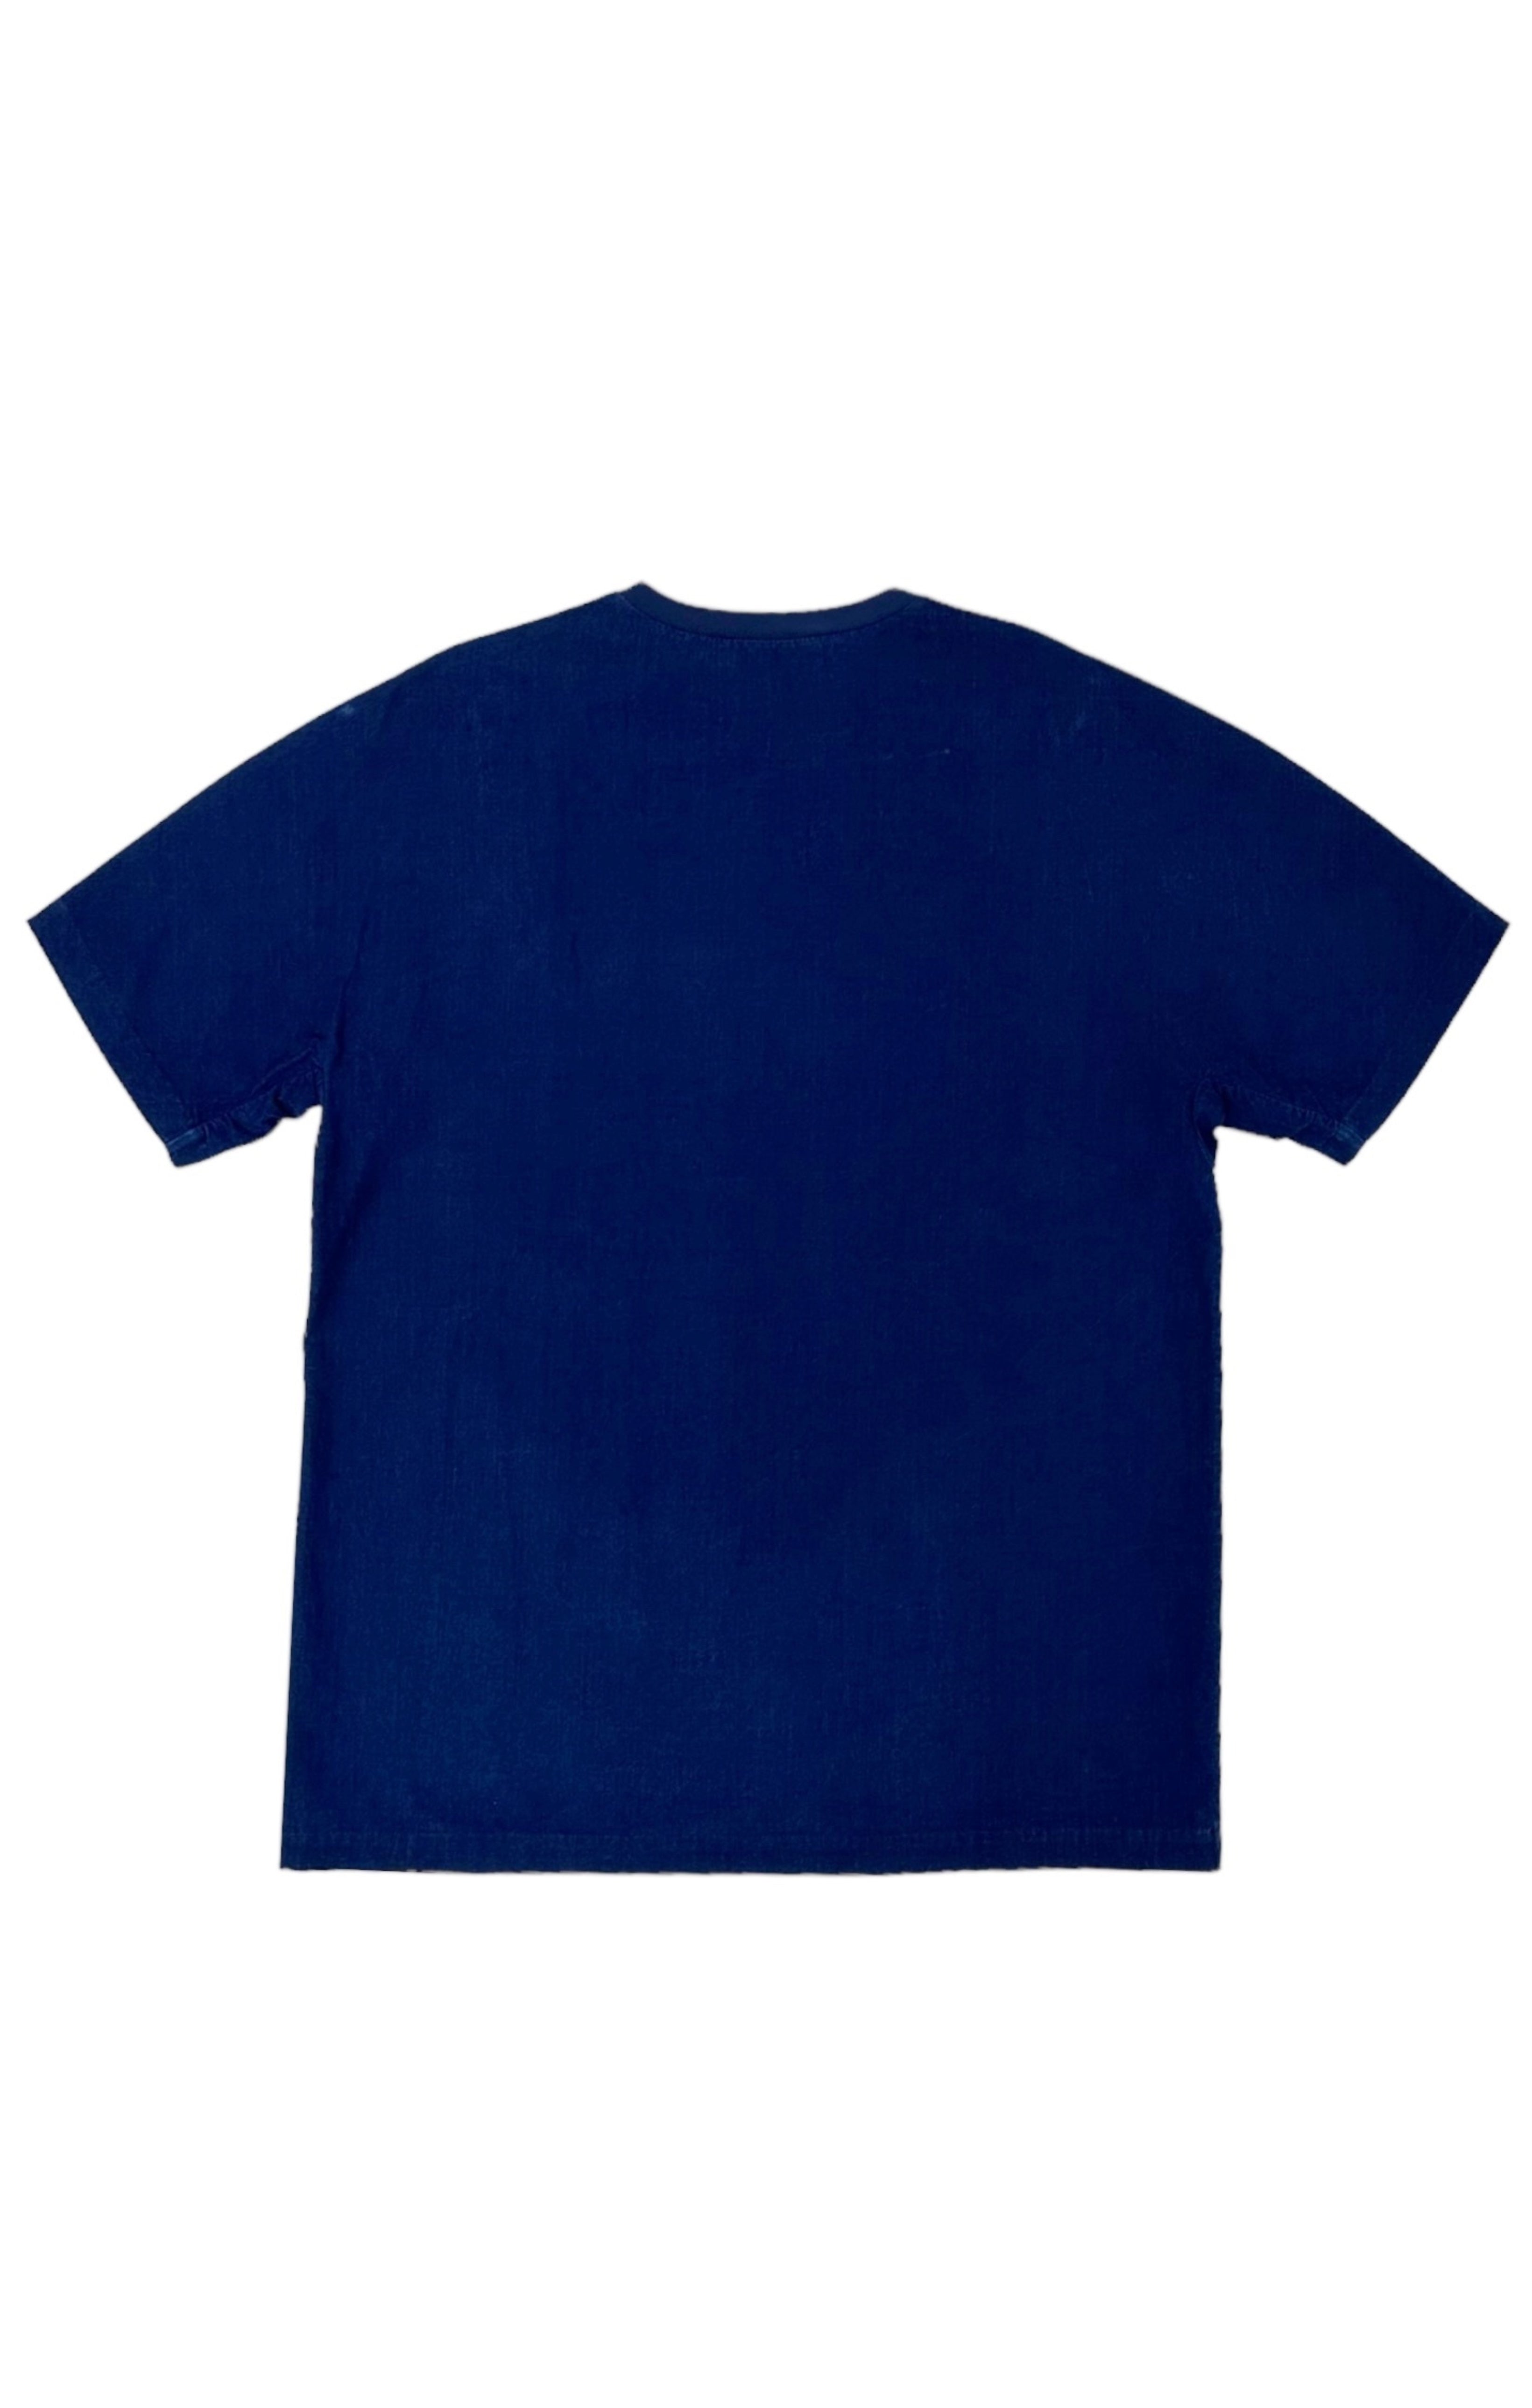 3.1 PHILLIP LIM (RARE) Shirt Size: XL